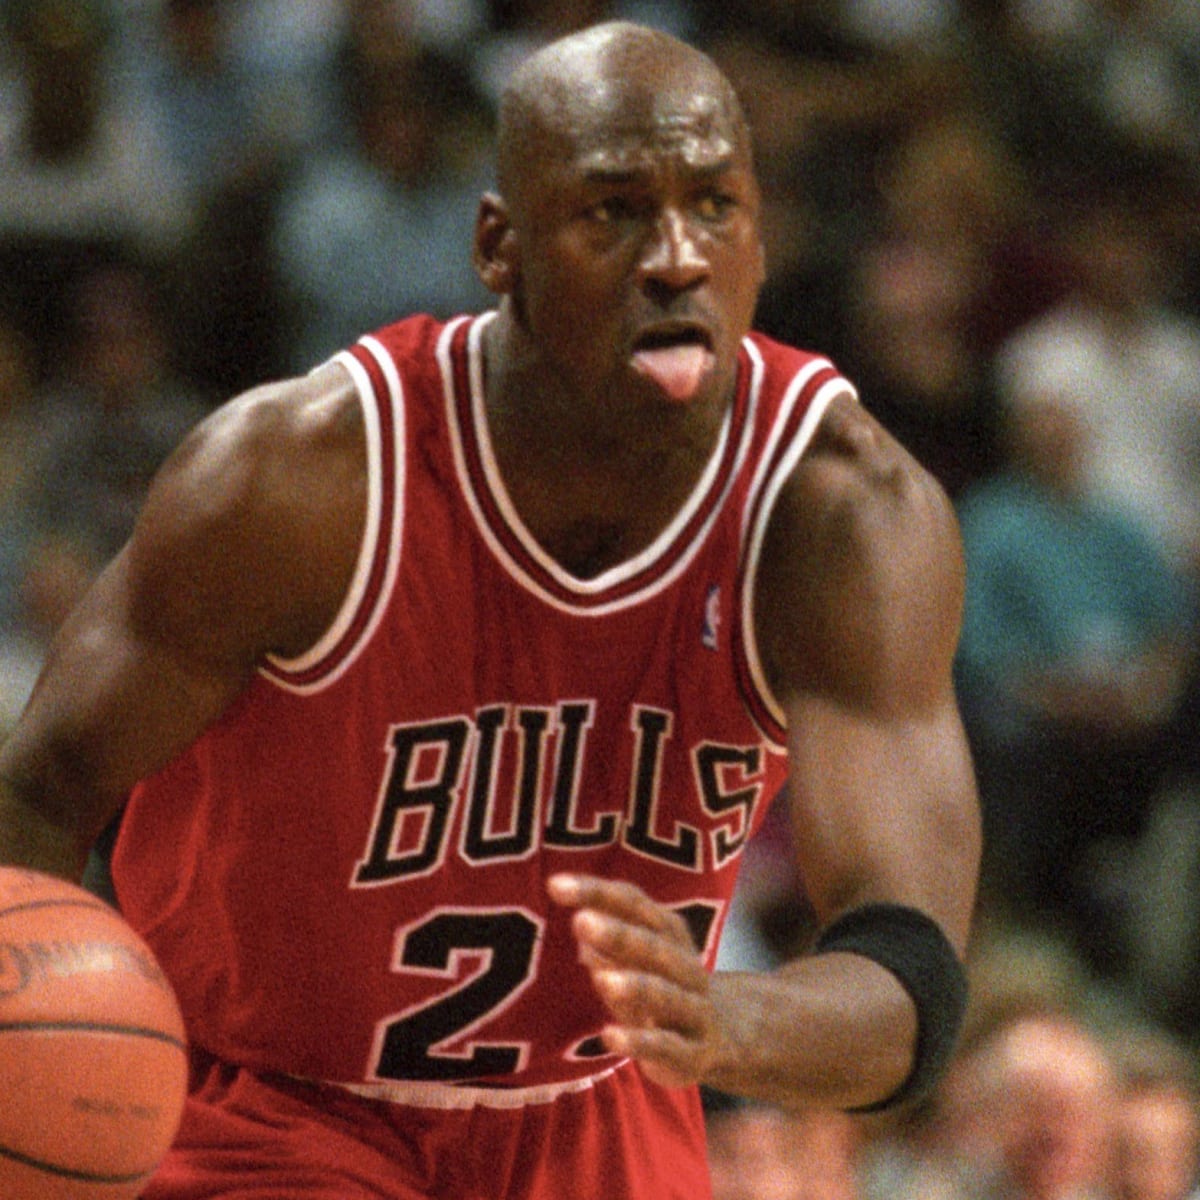 NBA rename MVP trophy after Michael Jordan